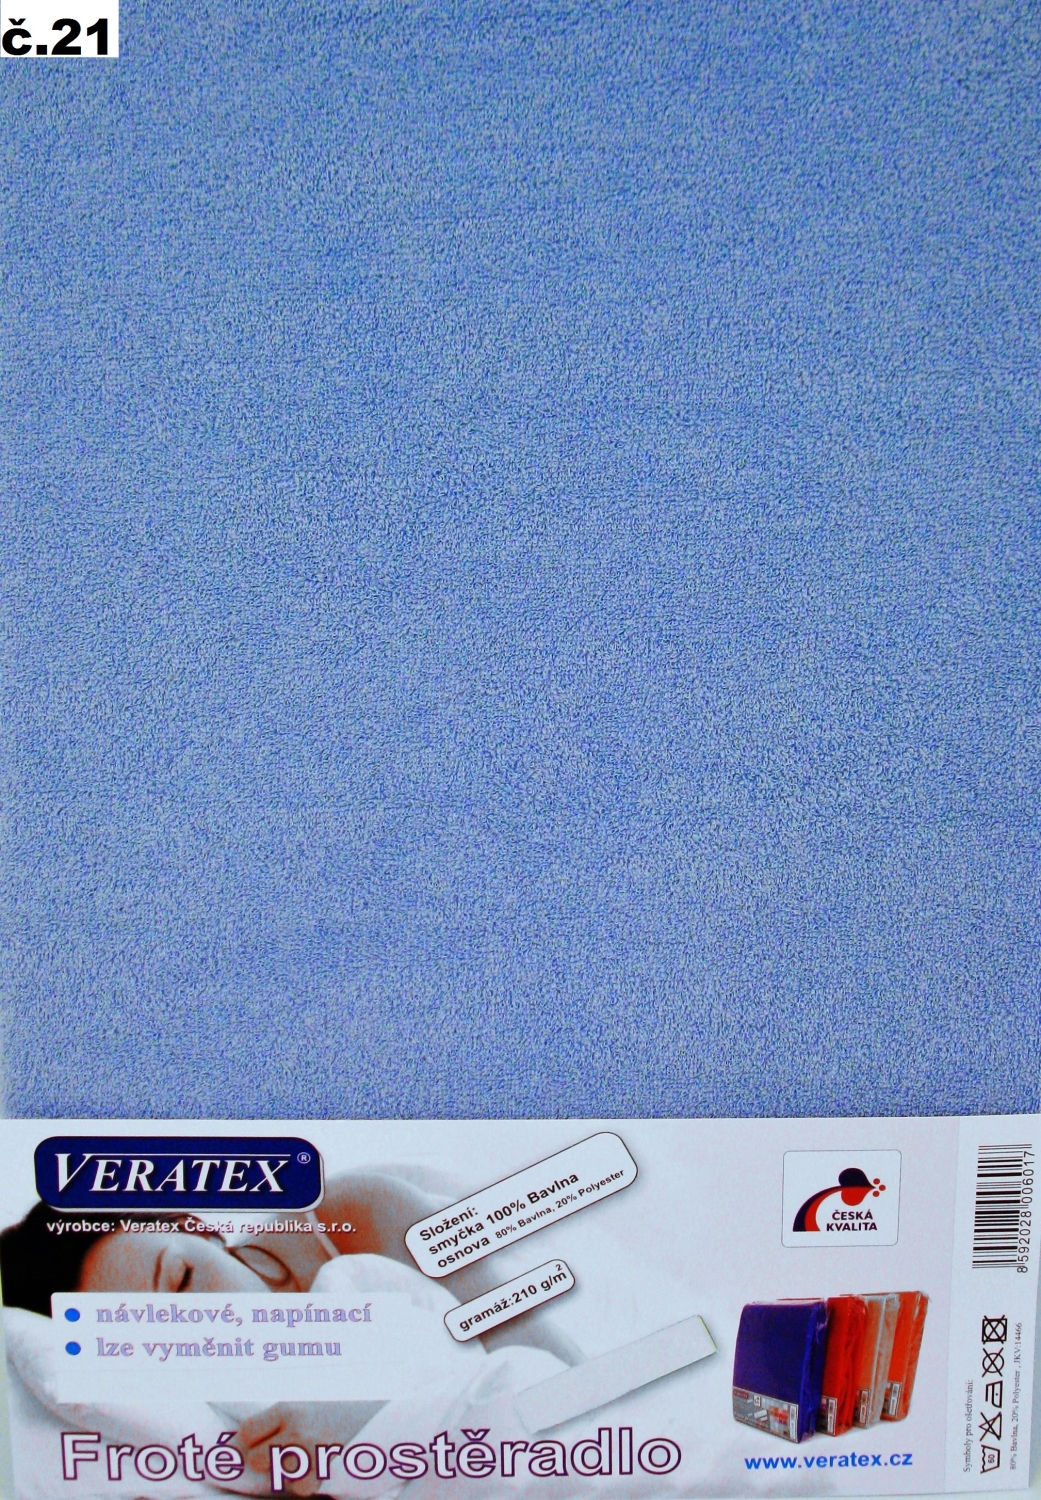 Veratex Froté prostěradlo 140x200/16 cm (č.21-sv.modrá)